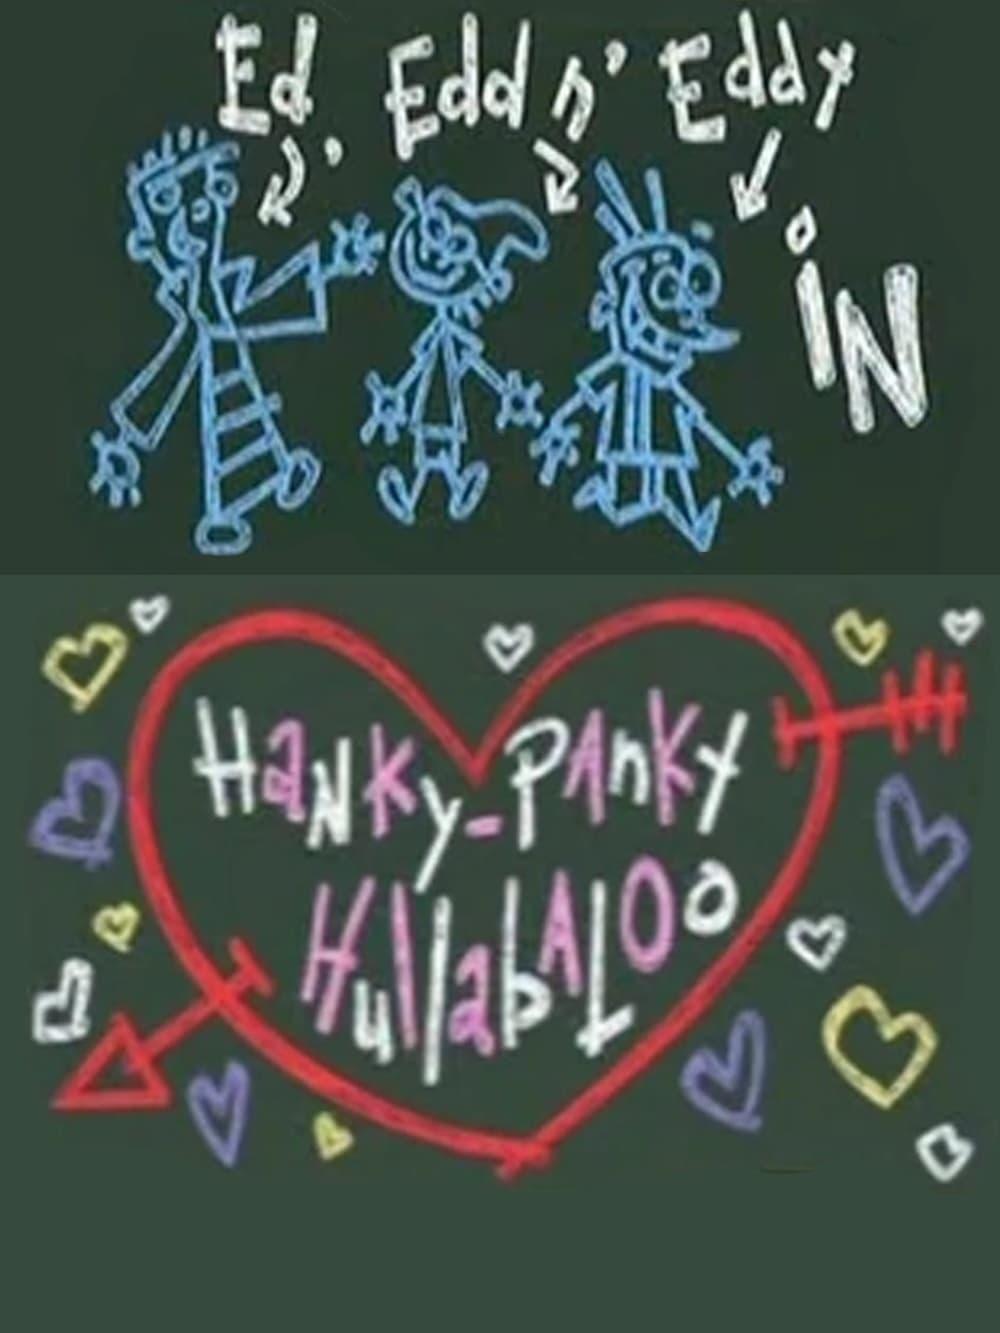 Ed, Edd n Eddy's Hanky Panky Hullabaloo poster